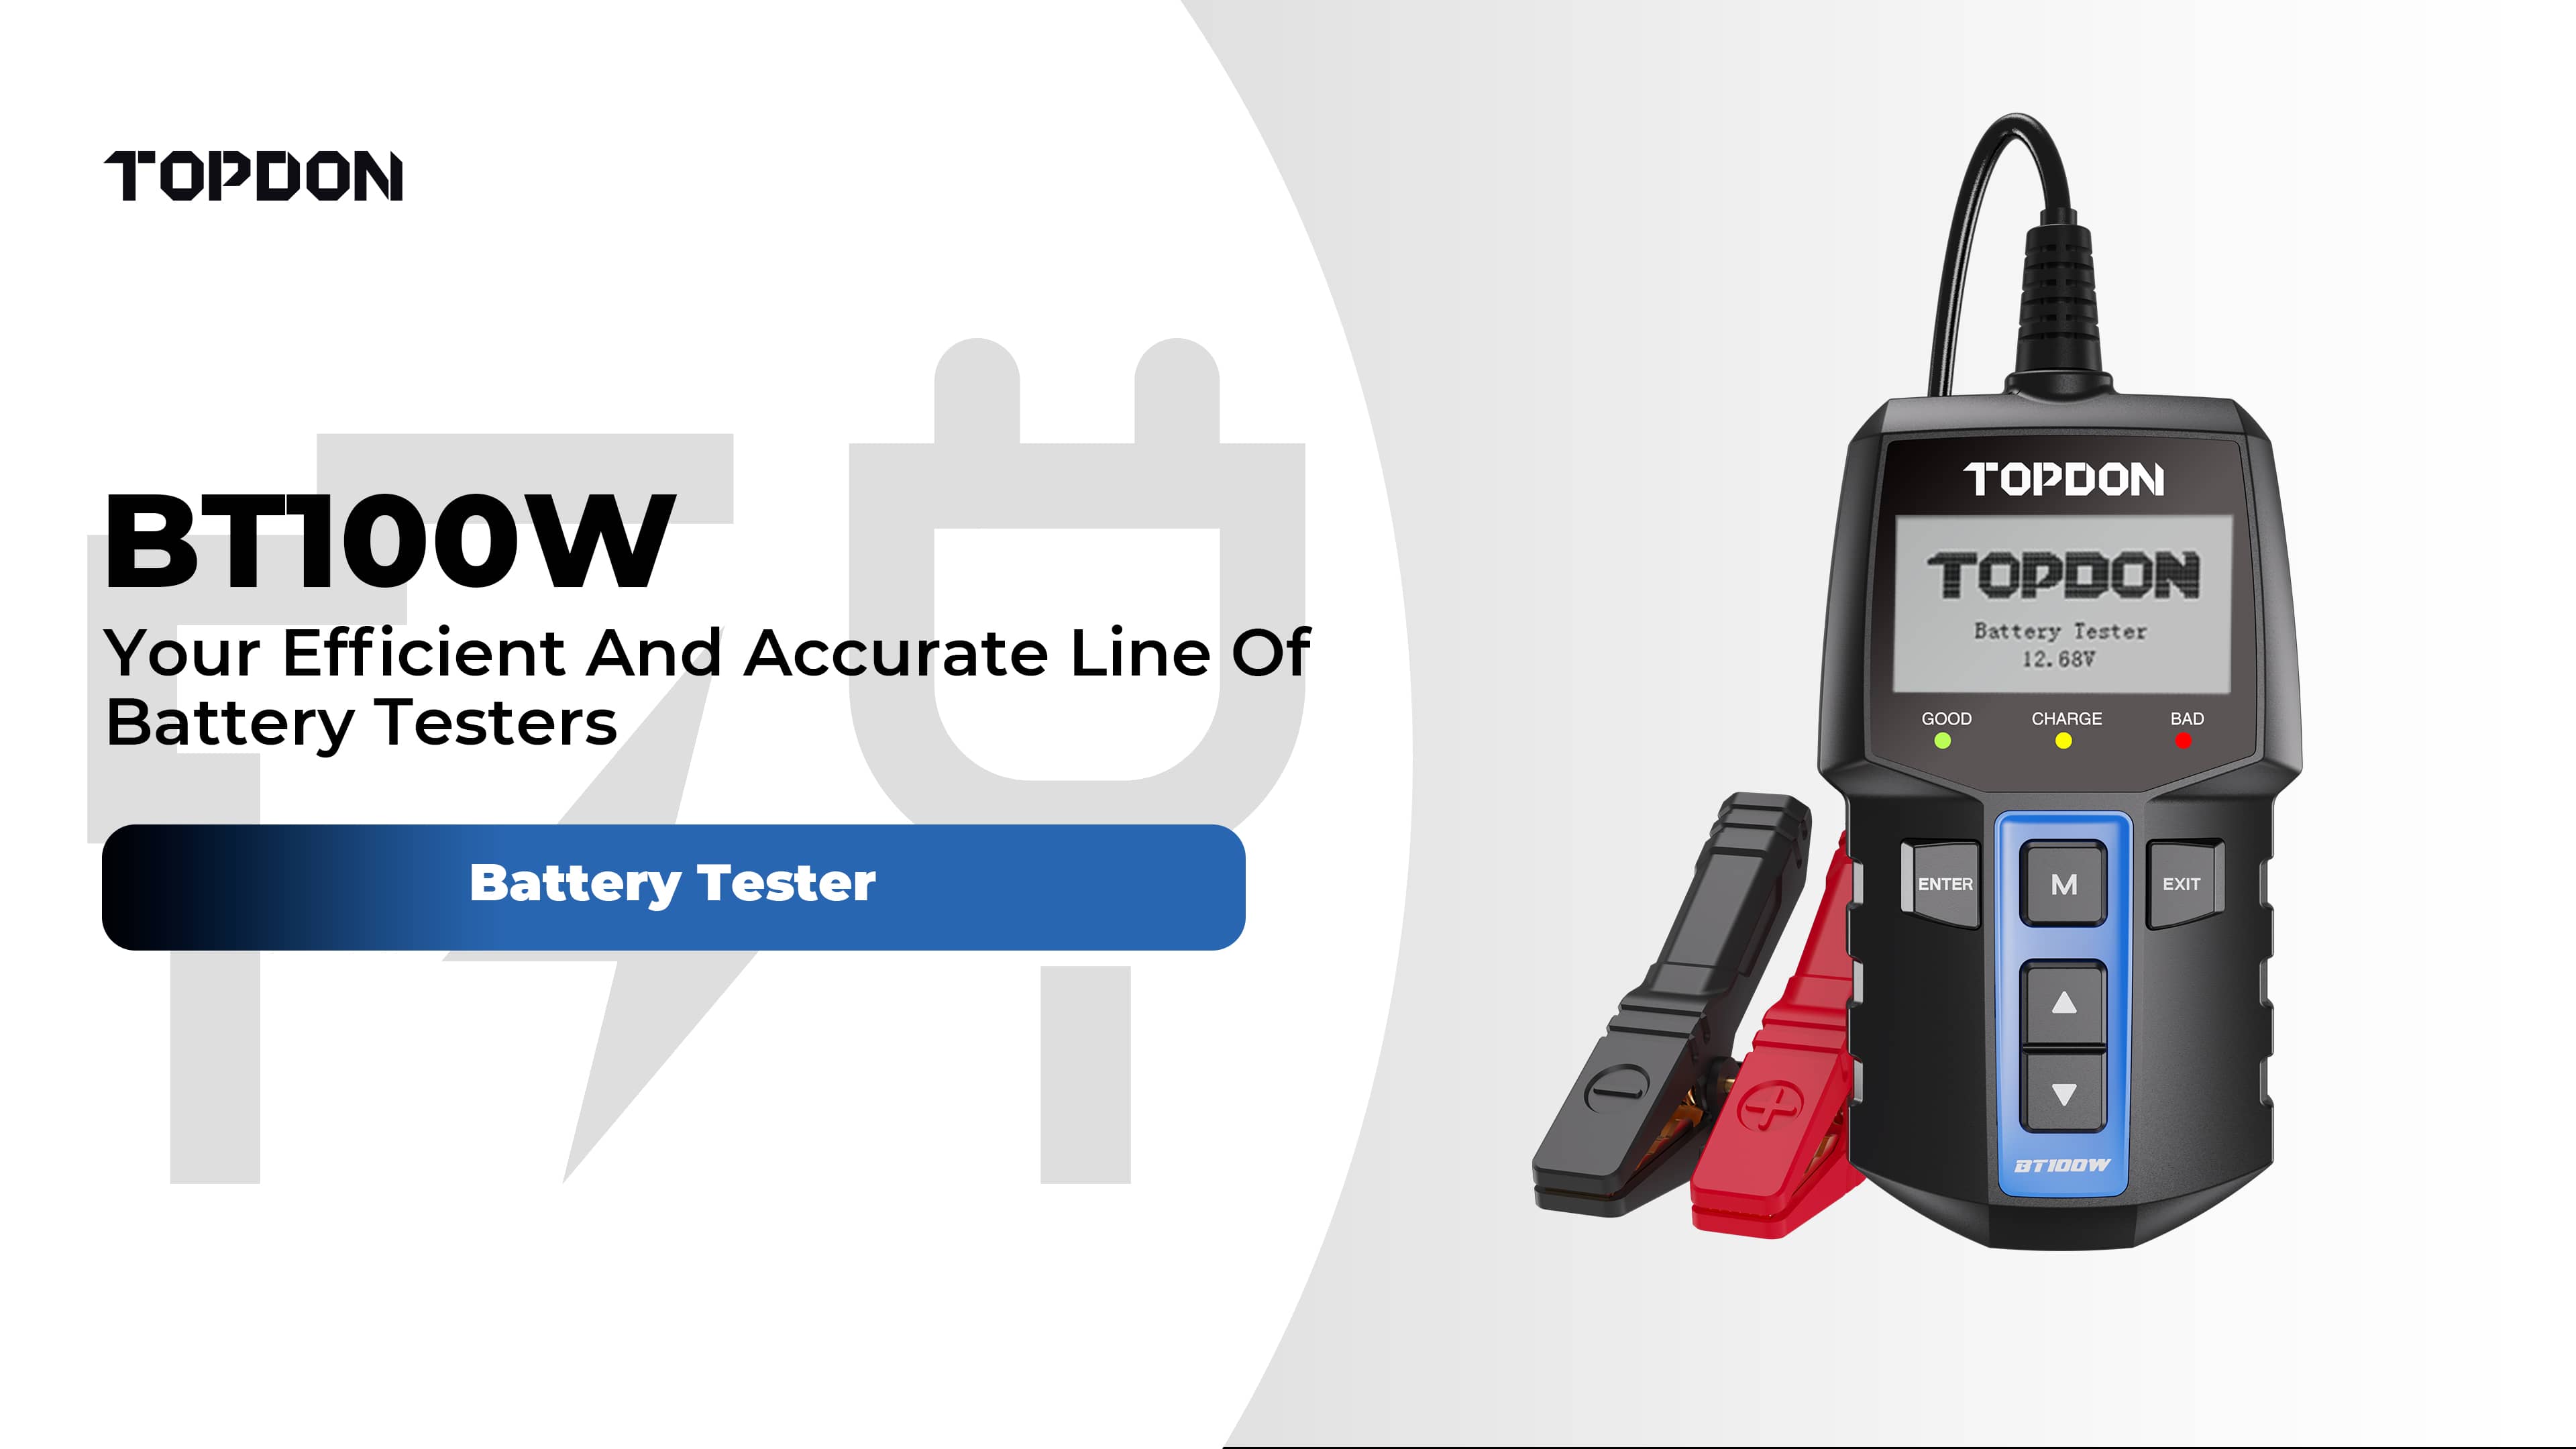 TOPDON BT100W | Battery Tester